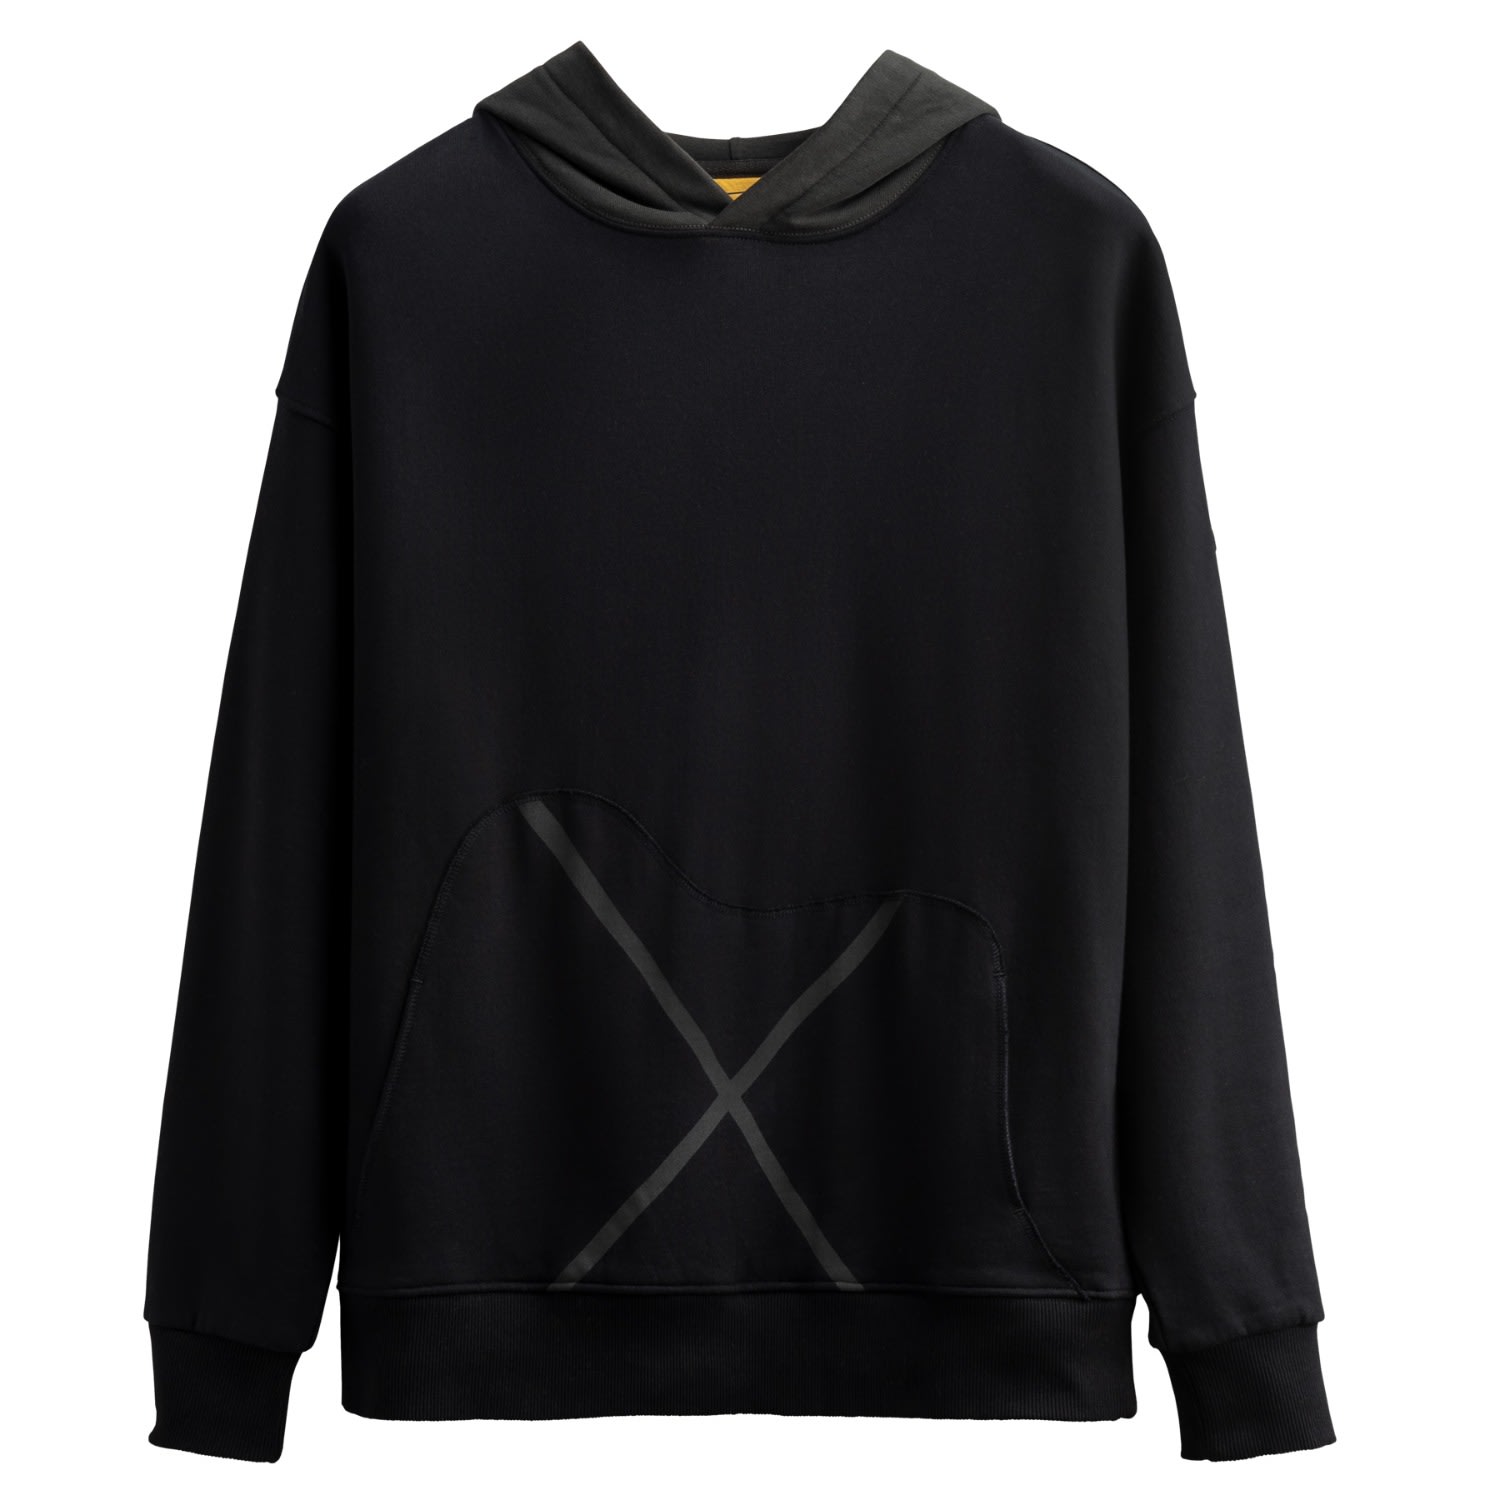 Men's Black Unisex Design Hoodie Sweatshirt - Xpocket - Tar Extra Small KAFT